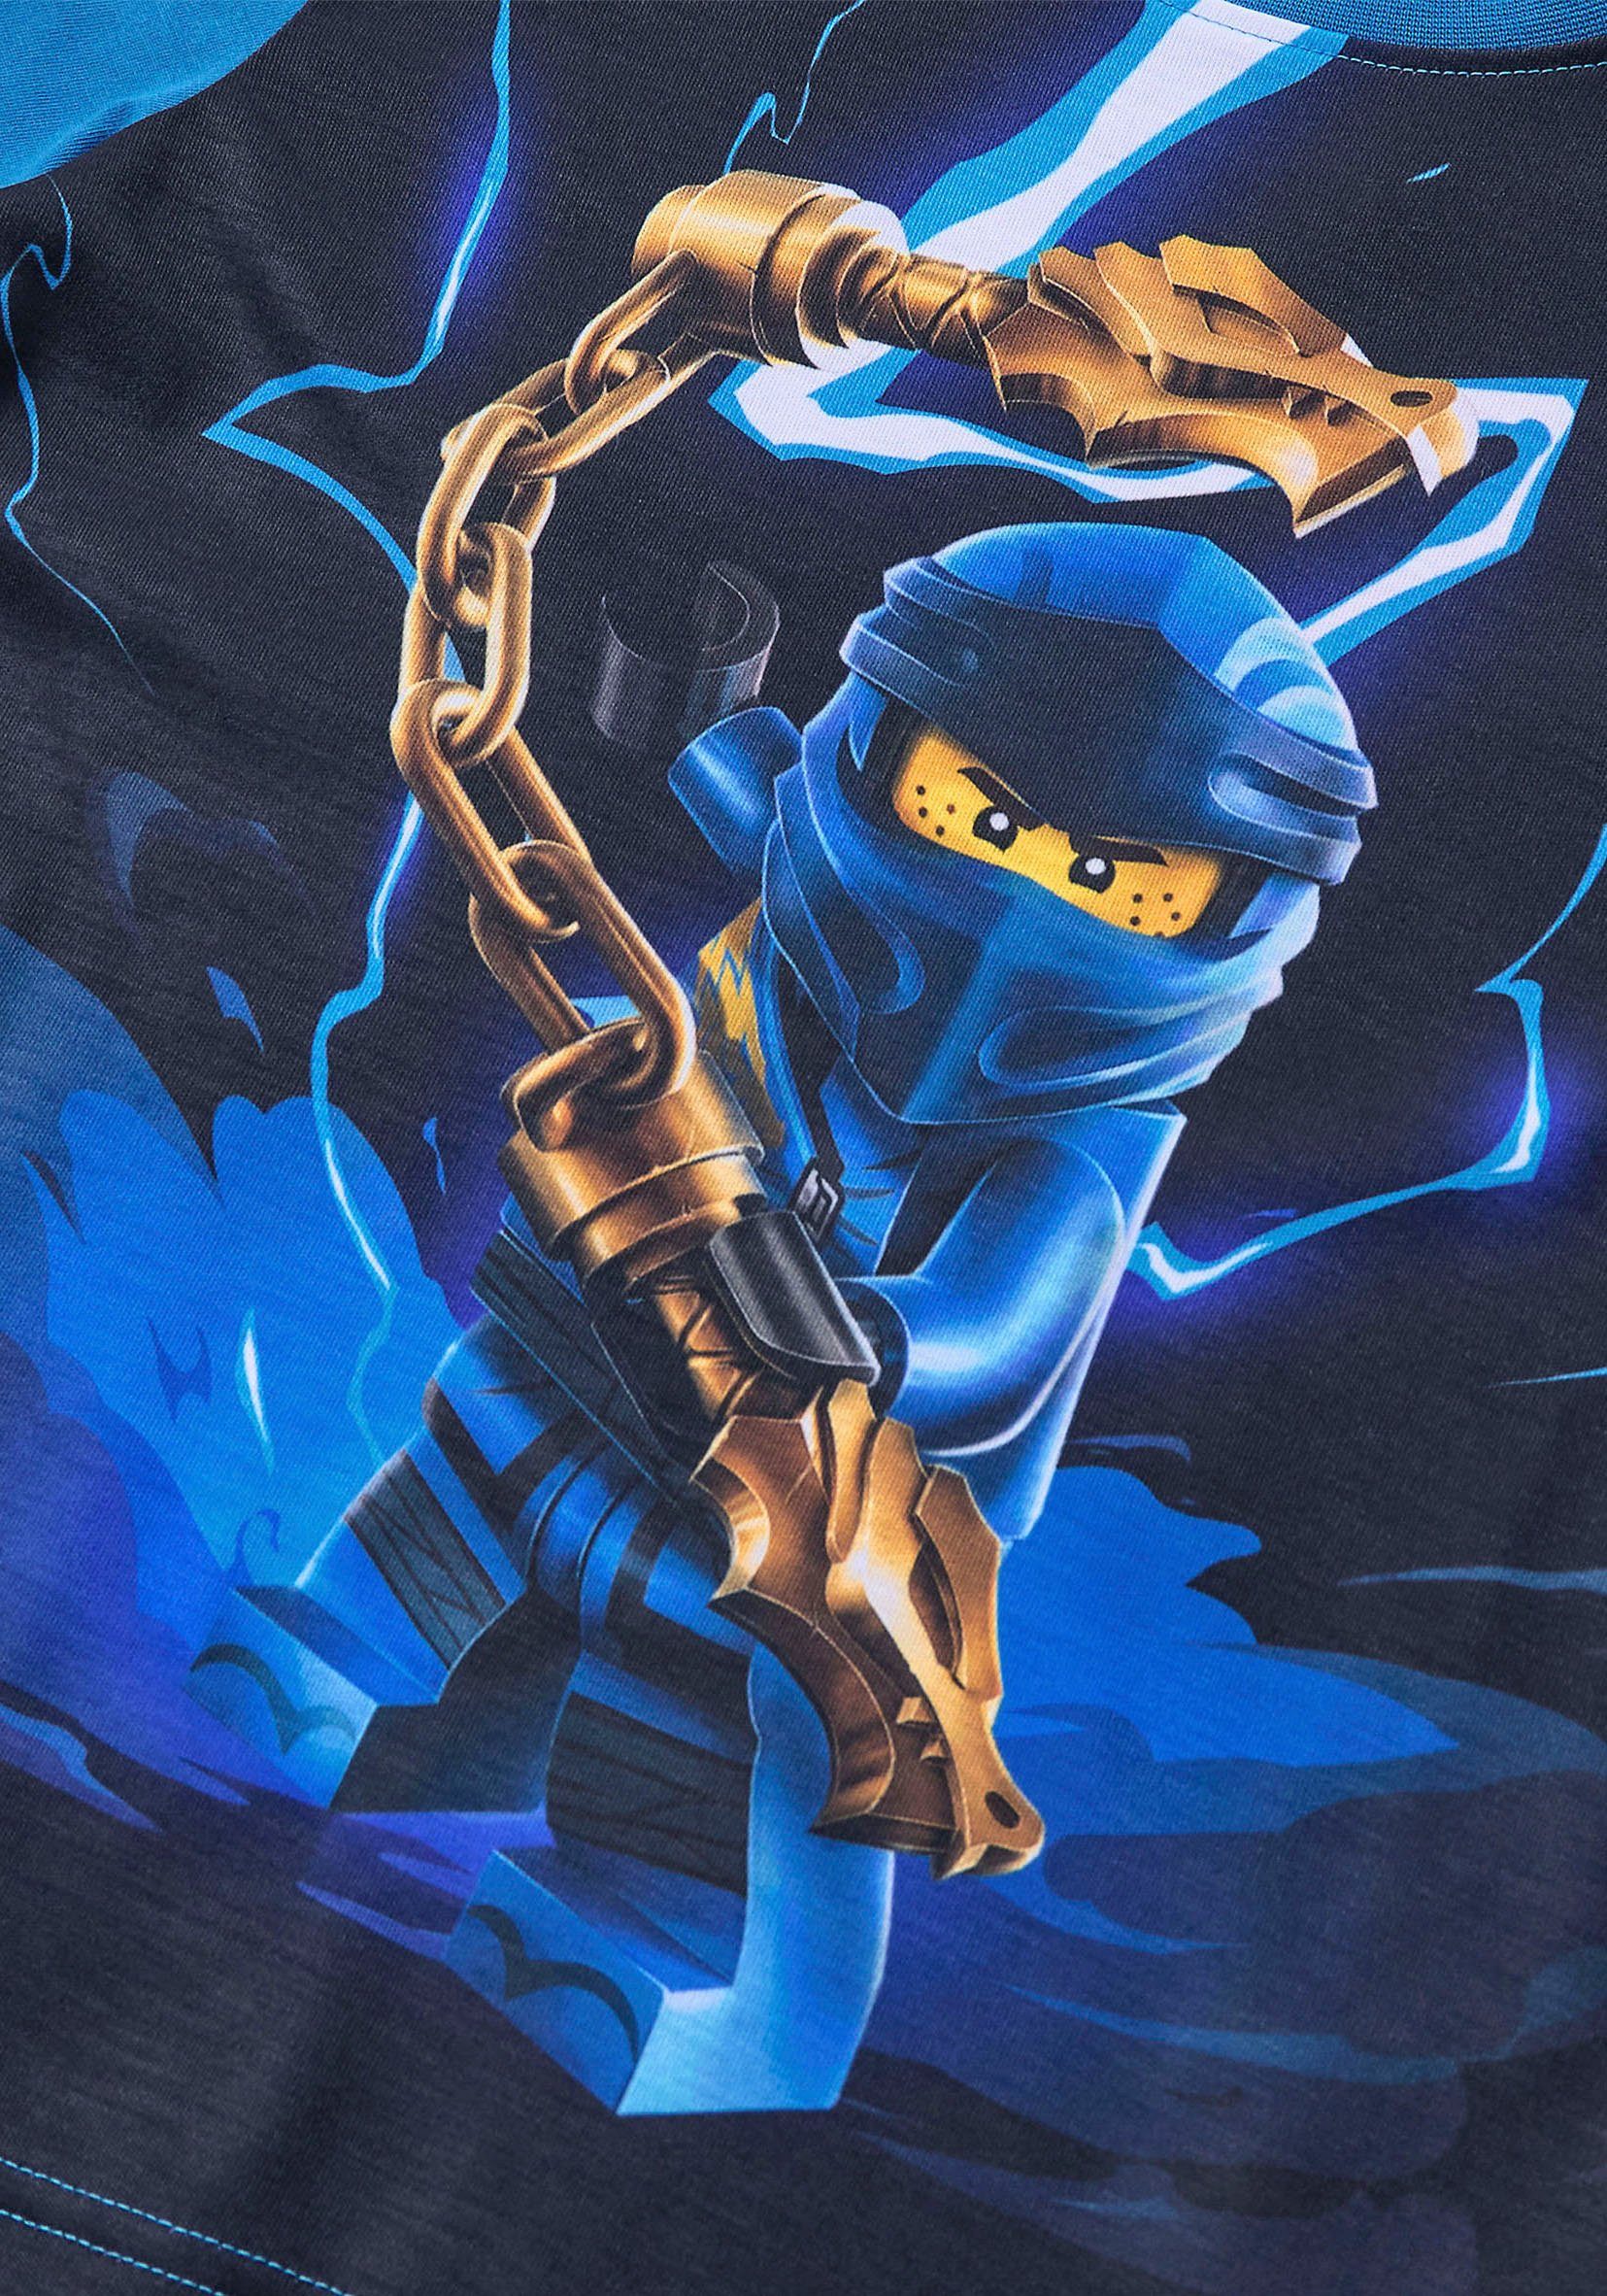 blue coolem mit middle Wear LEGO® Frontprint T-Shirt